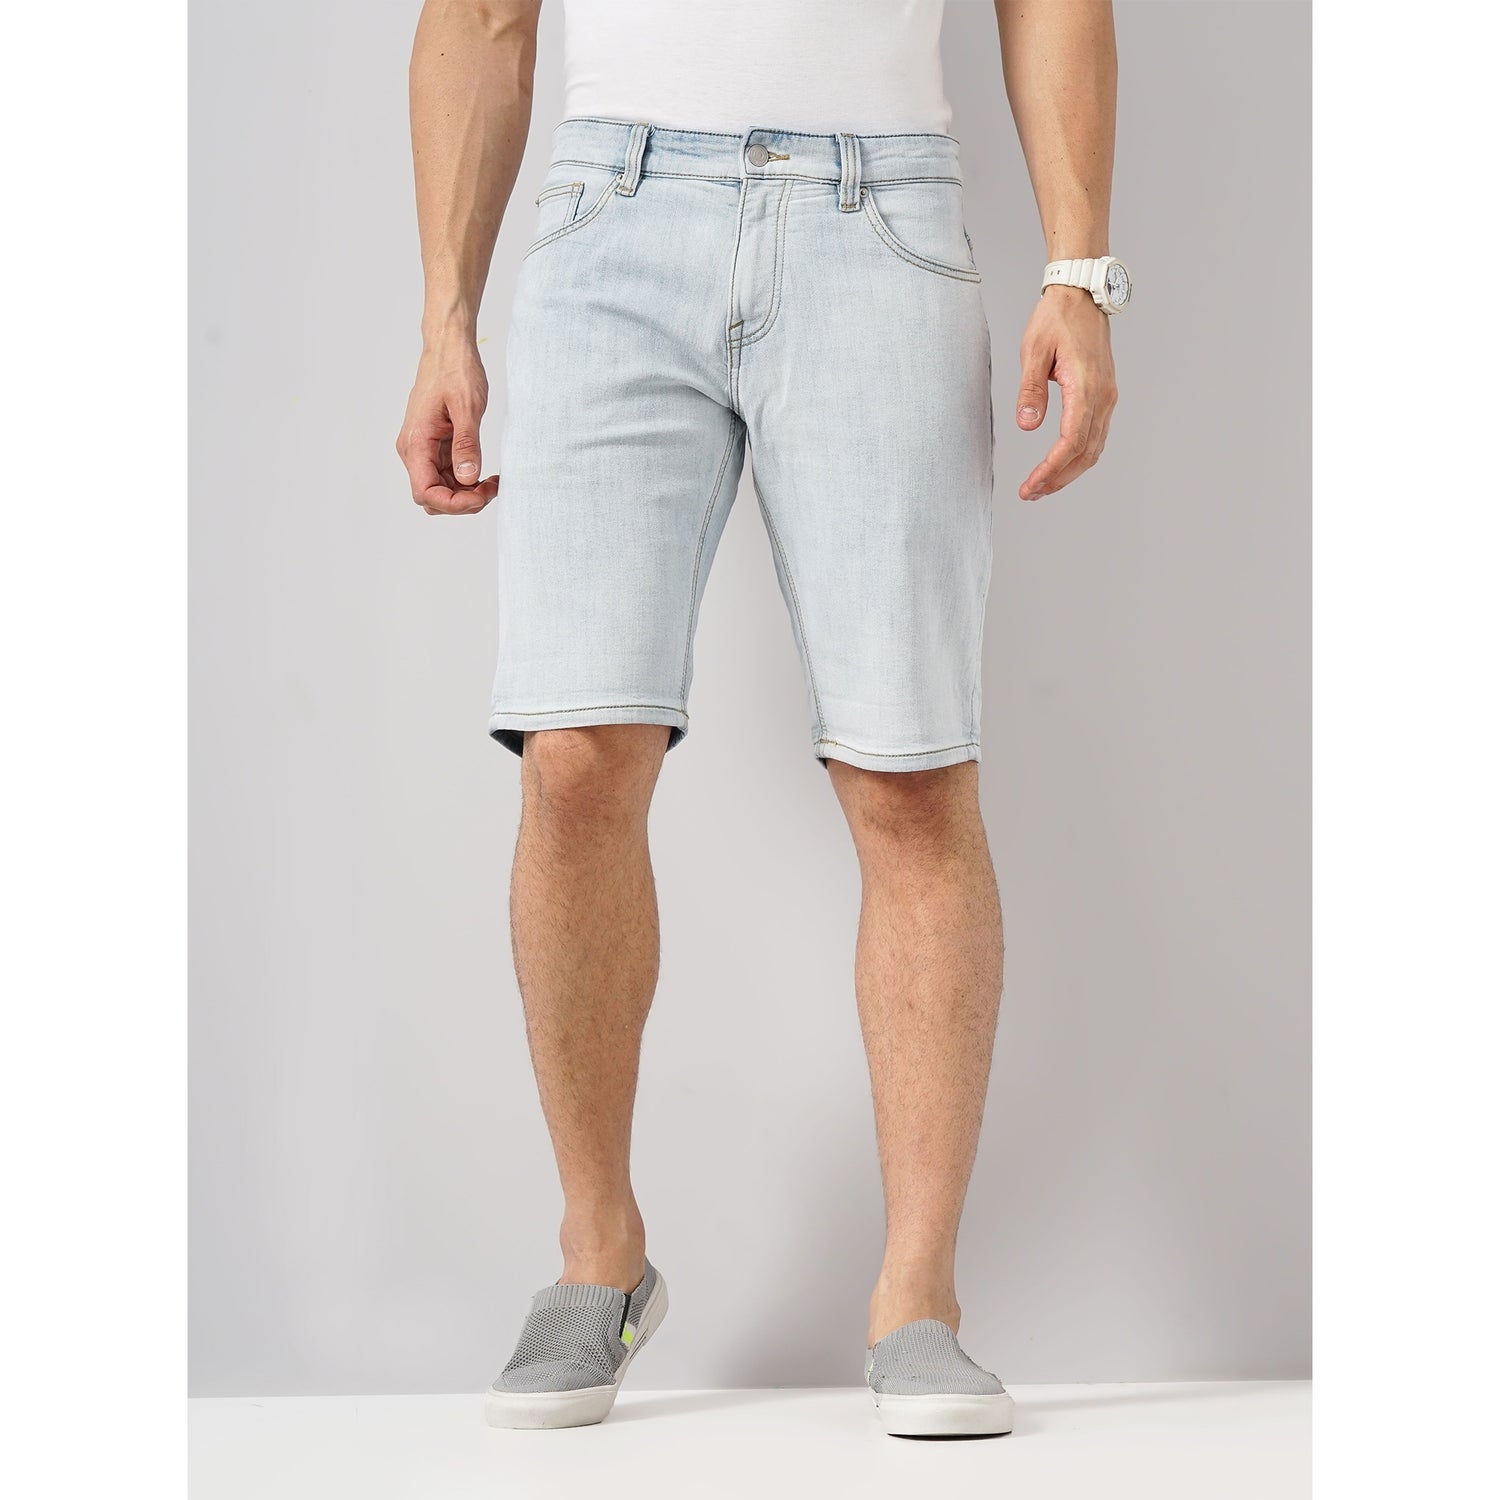 Men Blue Solid Regular Fit Cotton Knit Casual Shorts (BOKNITBM)